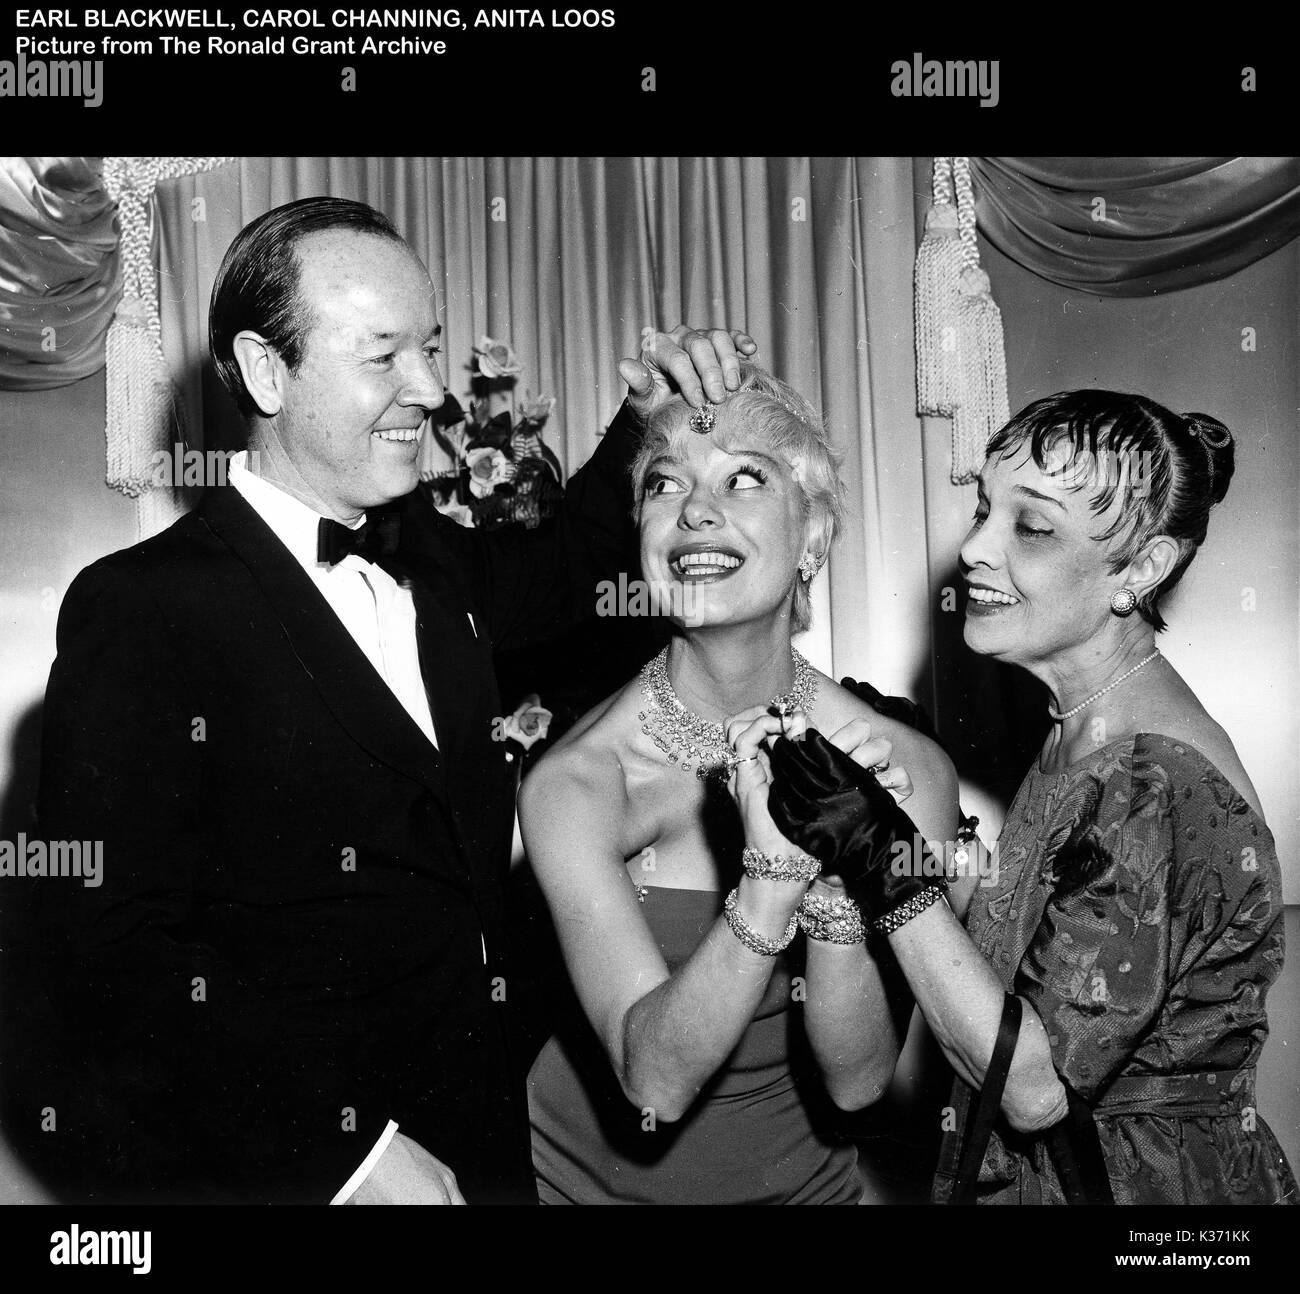 EARL BLACKWELL, Carol Channing, ANITA LOOS Stockfoto